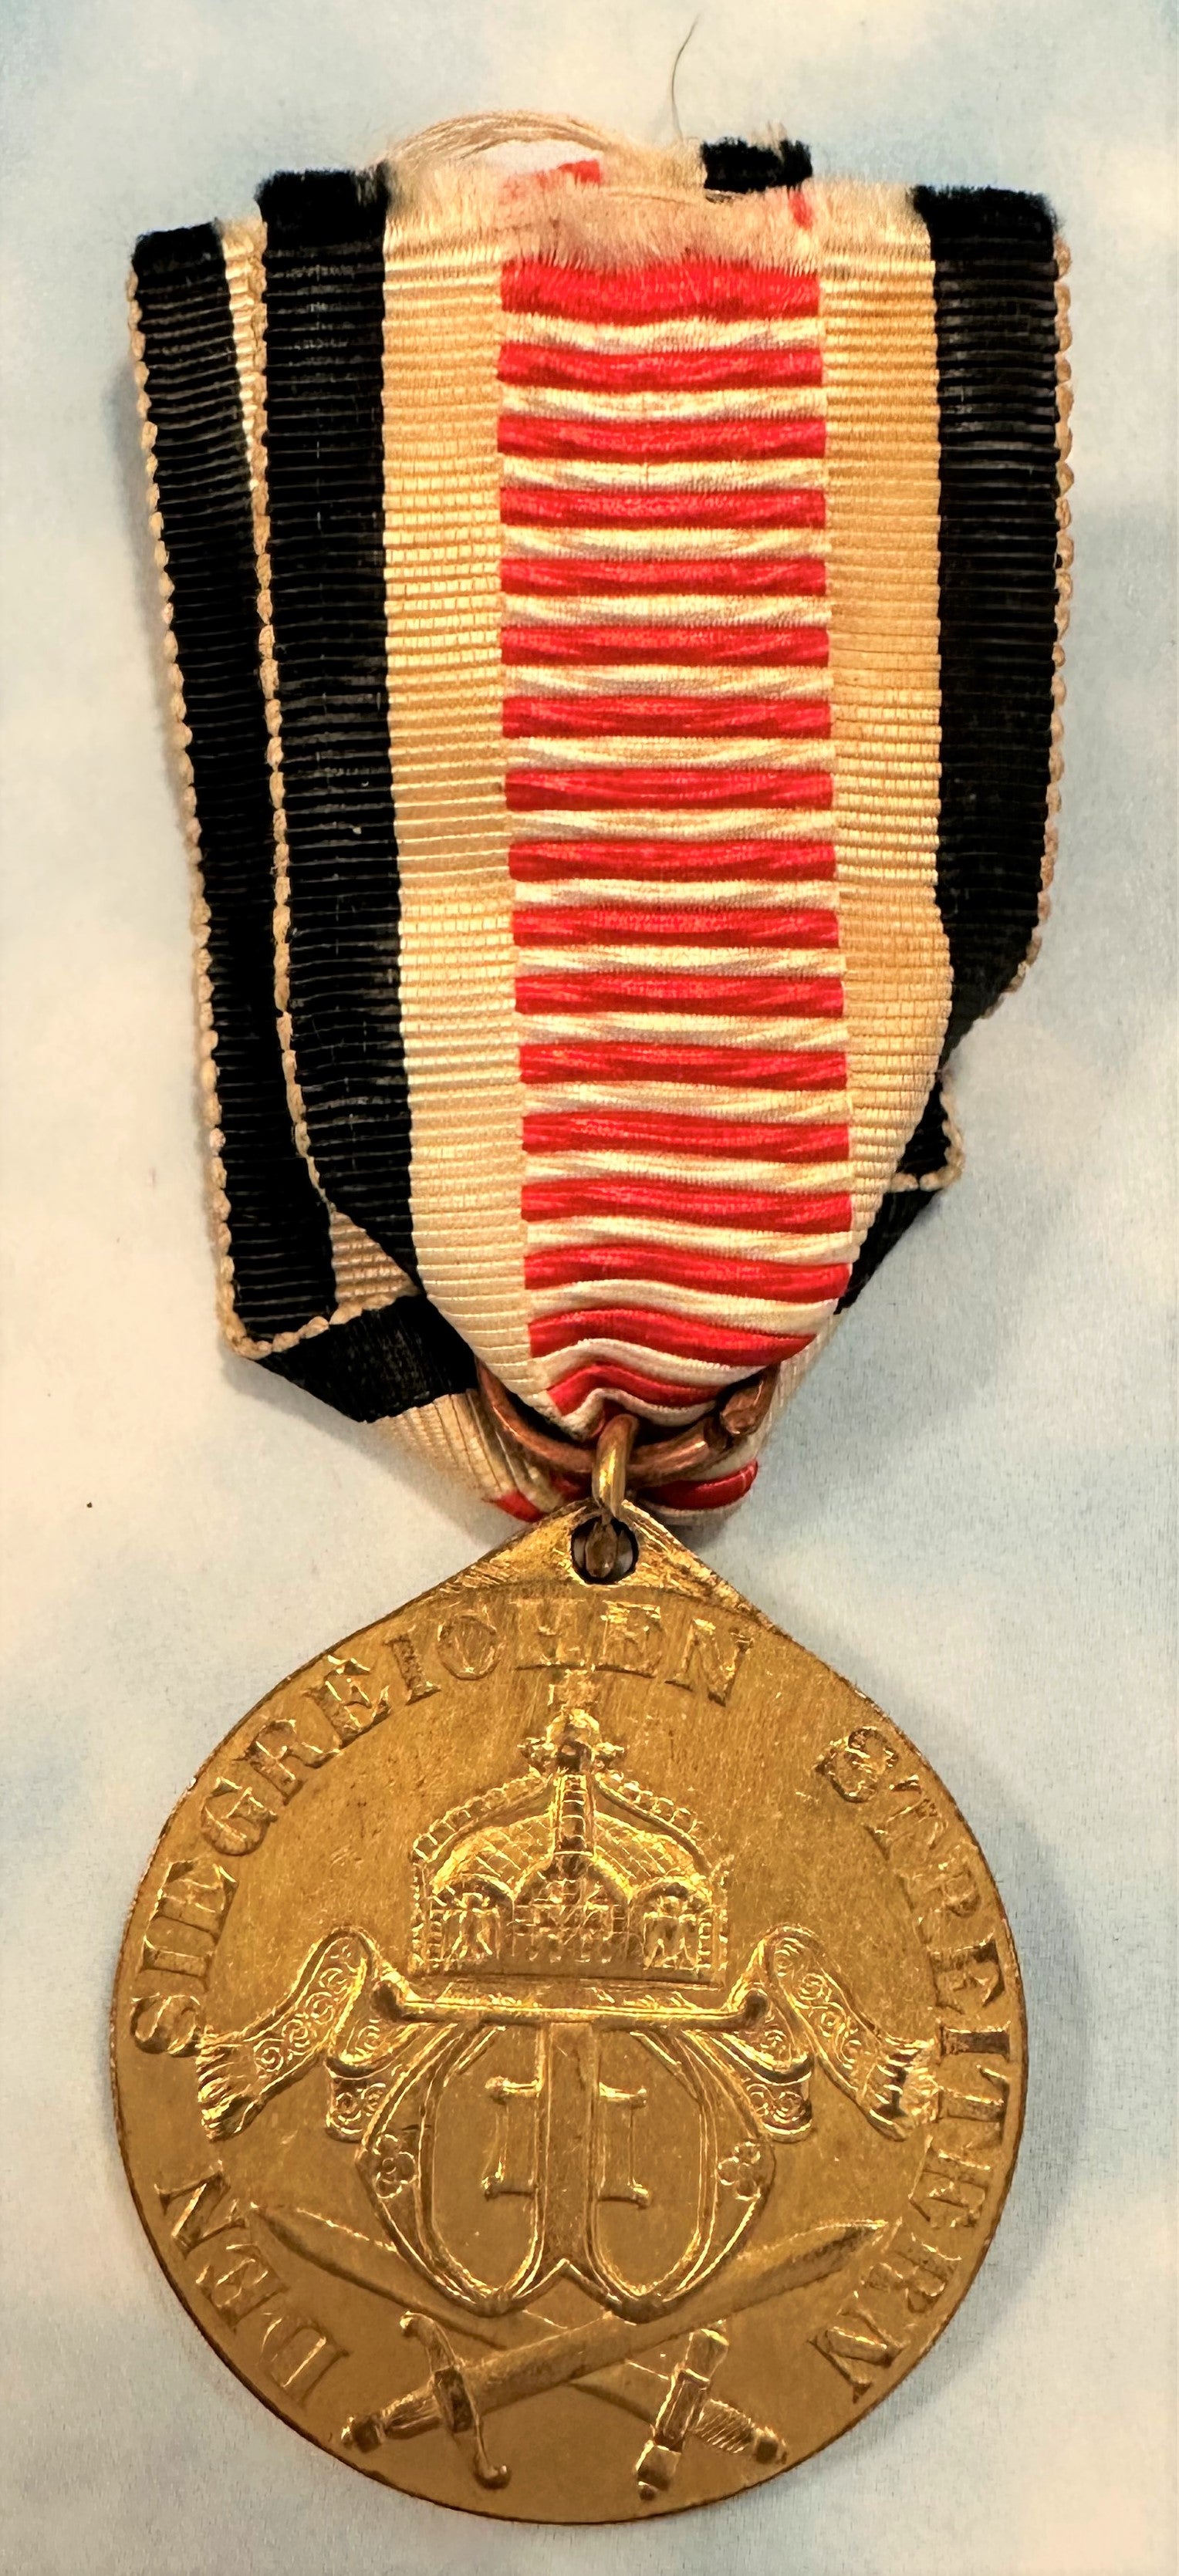 Southwest Africa Commemorative Medal - Derrittmeister Militaria Group